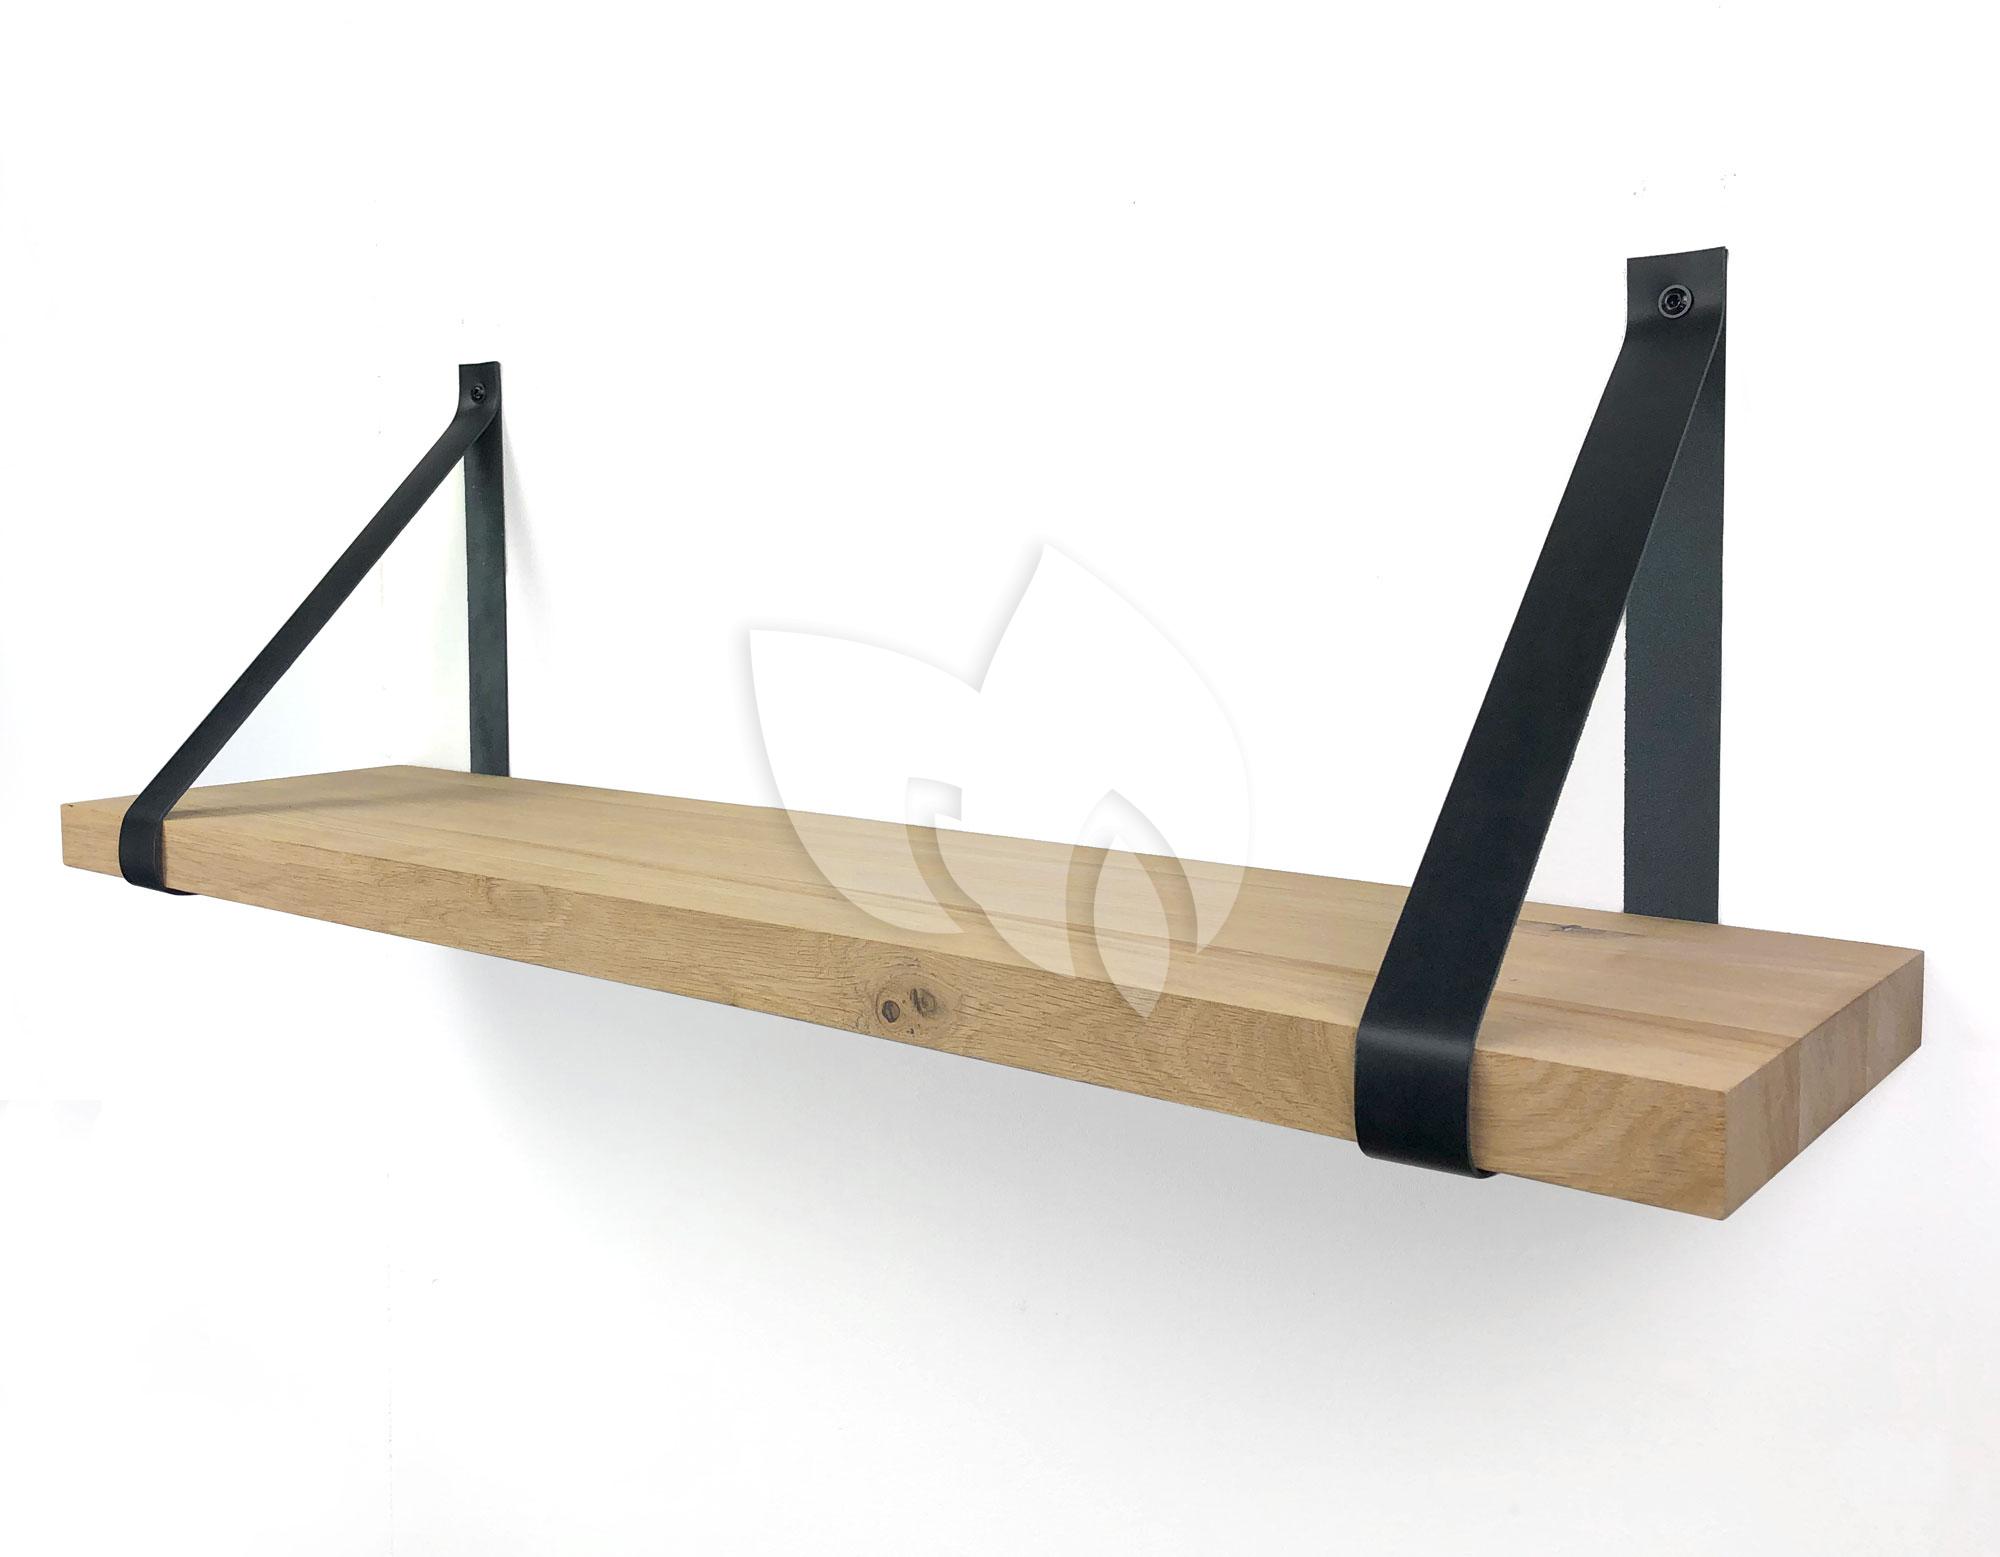 afschaffen winkel Concurrenten Wood Brothers Eiken wandplank massief recht 100 x 25 cm inclusief leren  riemen zwart | Tuinexpress.nl